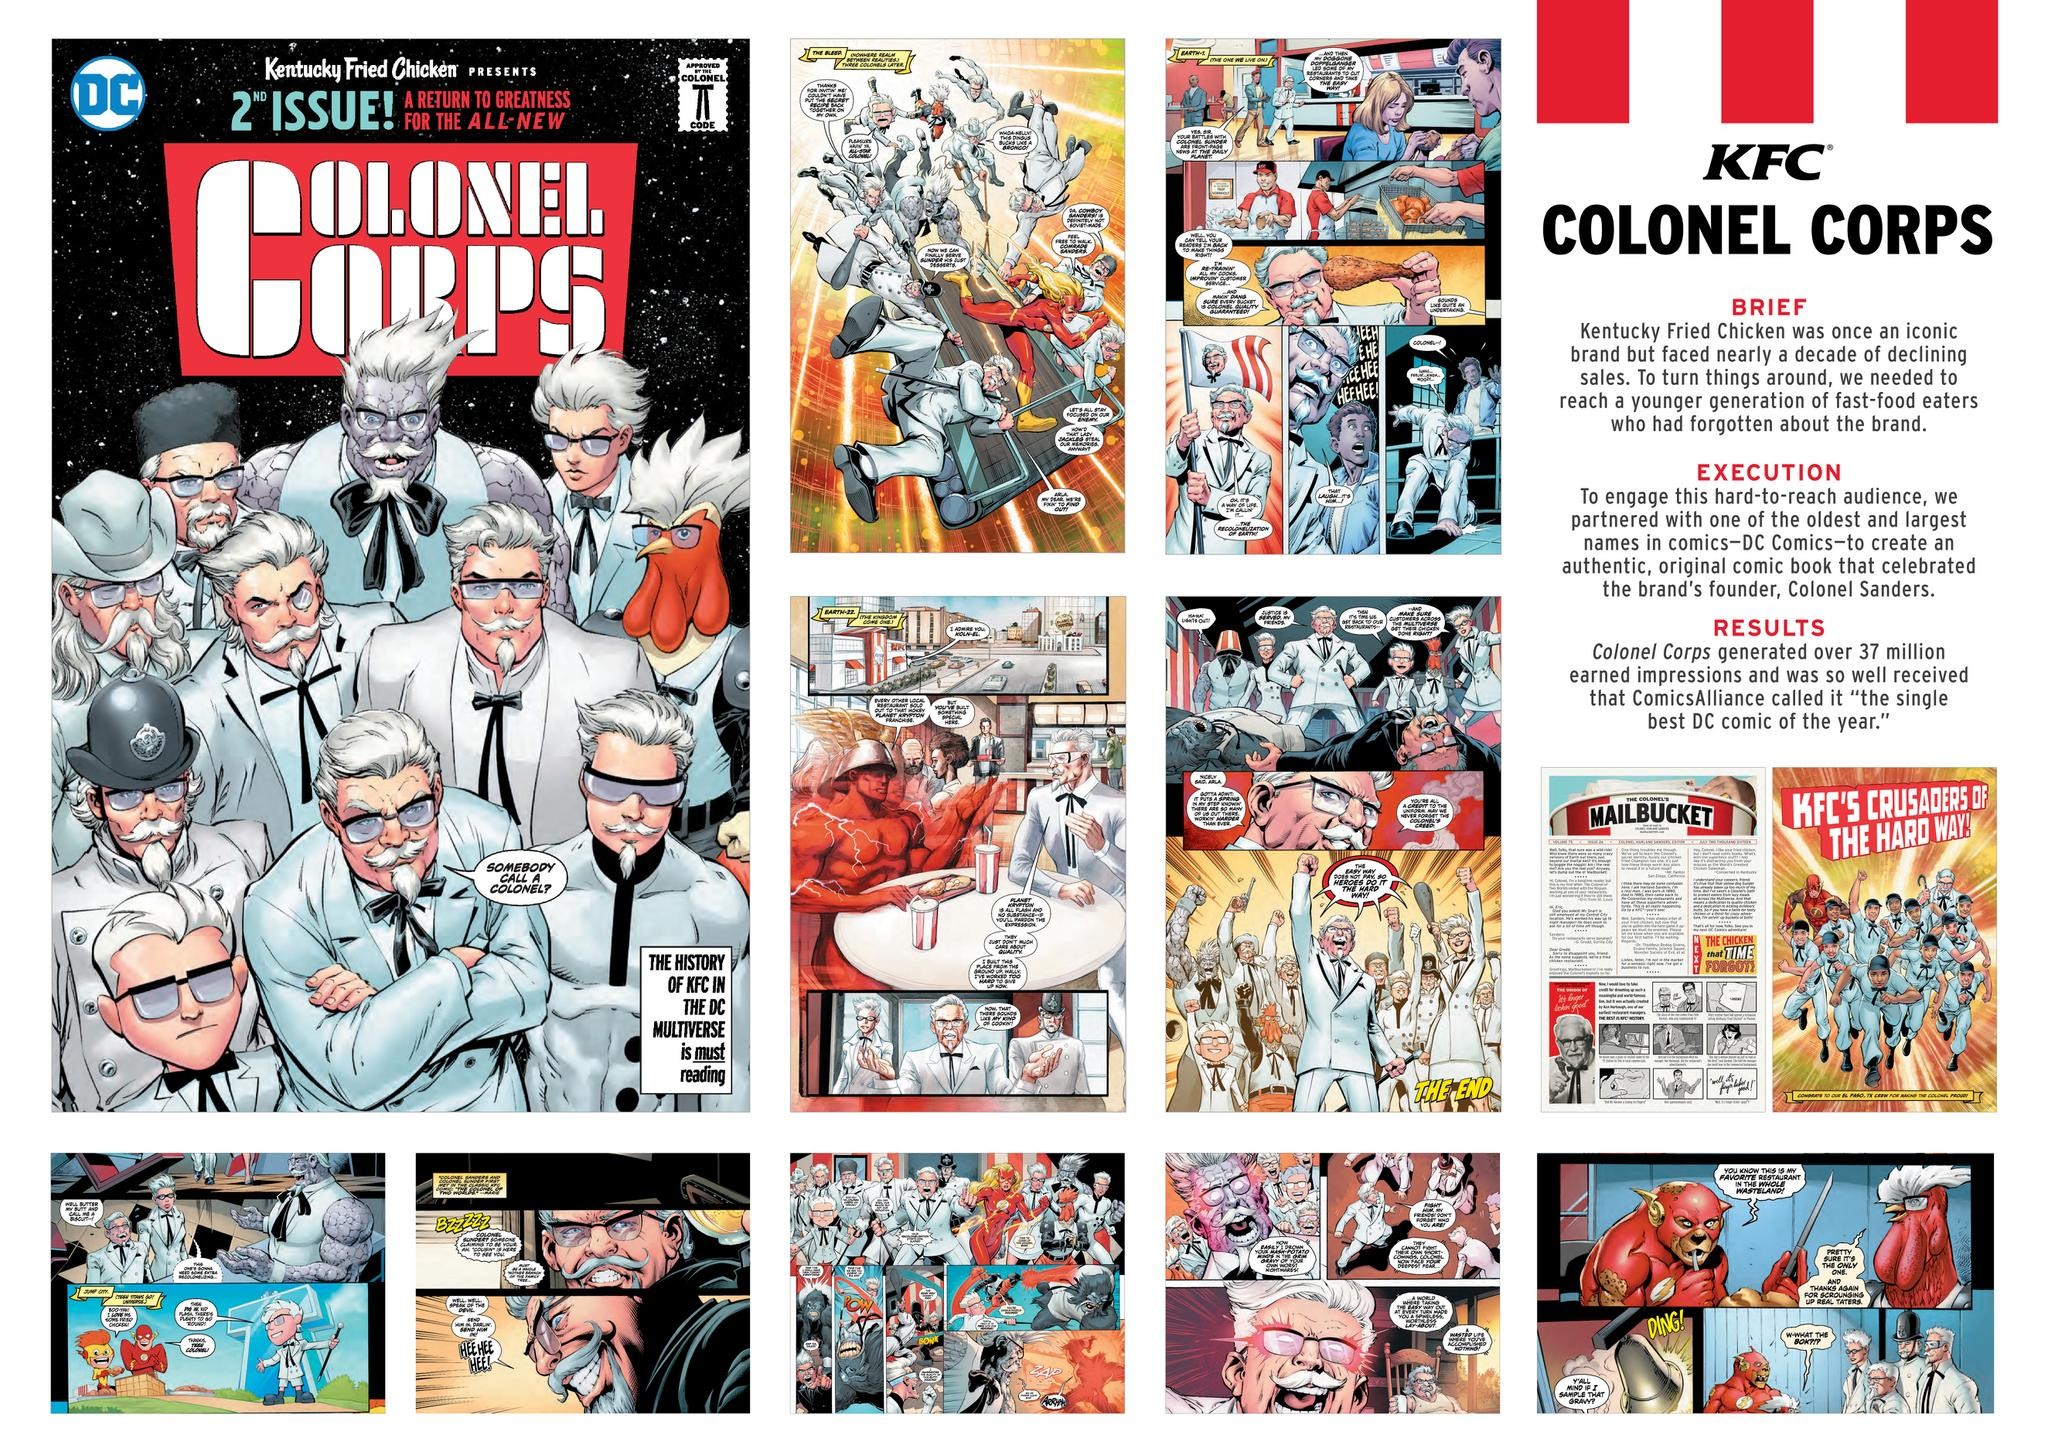 Colonel Corps KFC and DC Comics